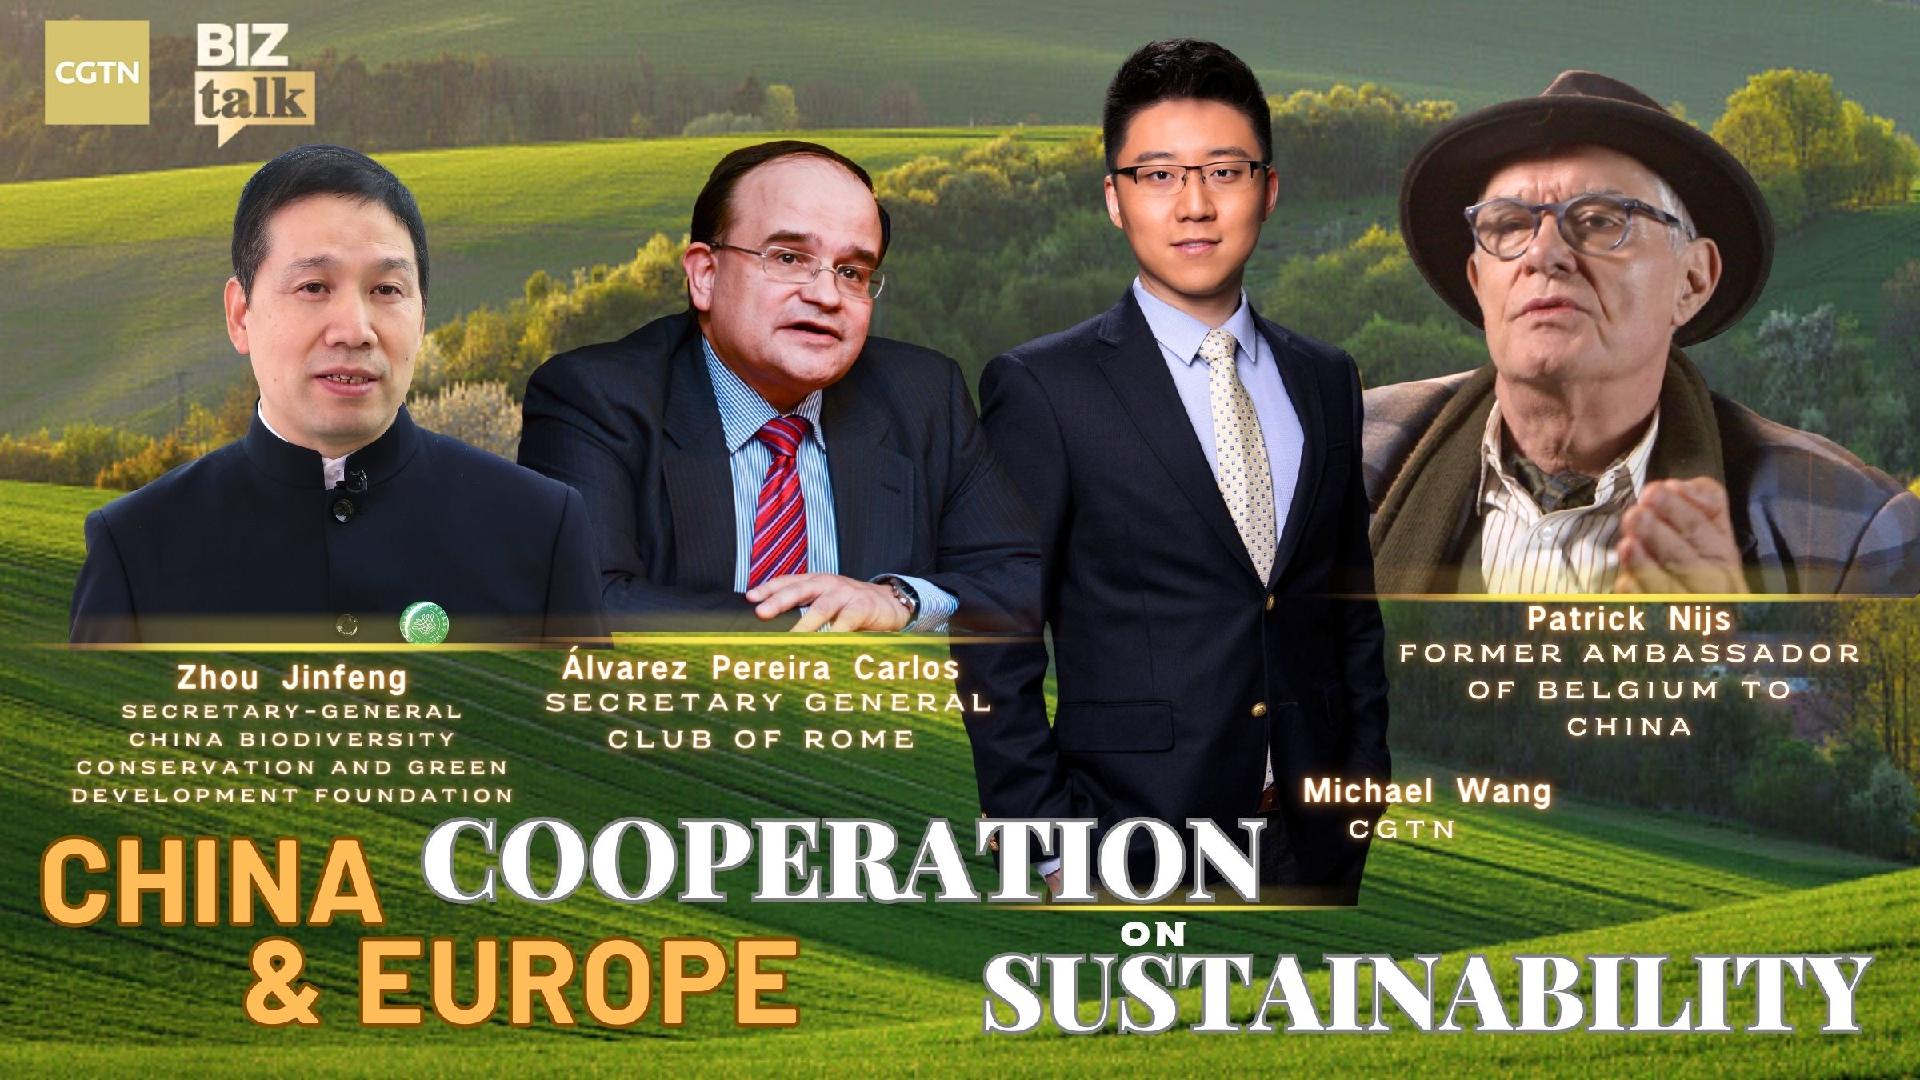 China-Europe cooperation on sustainability – CGTN [Video]